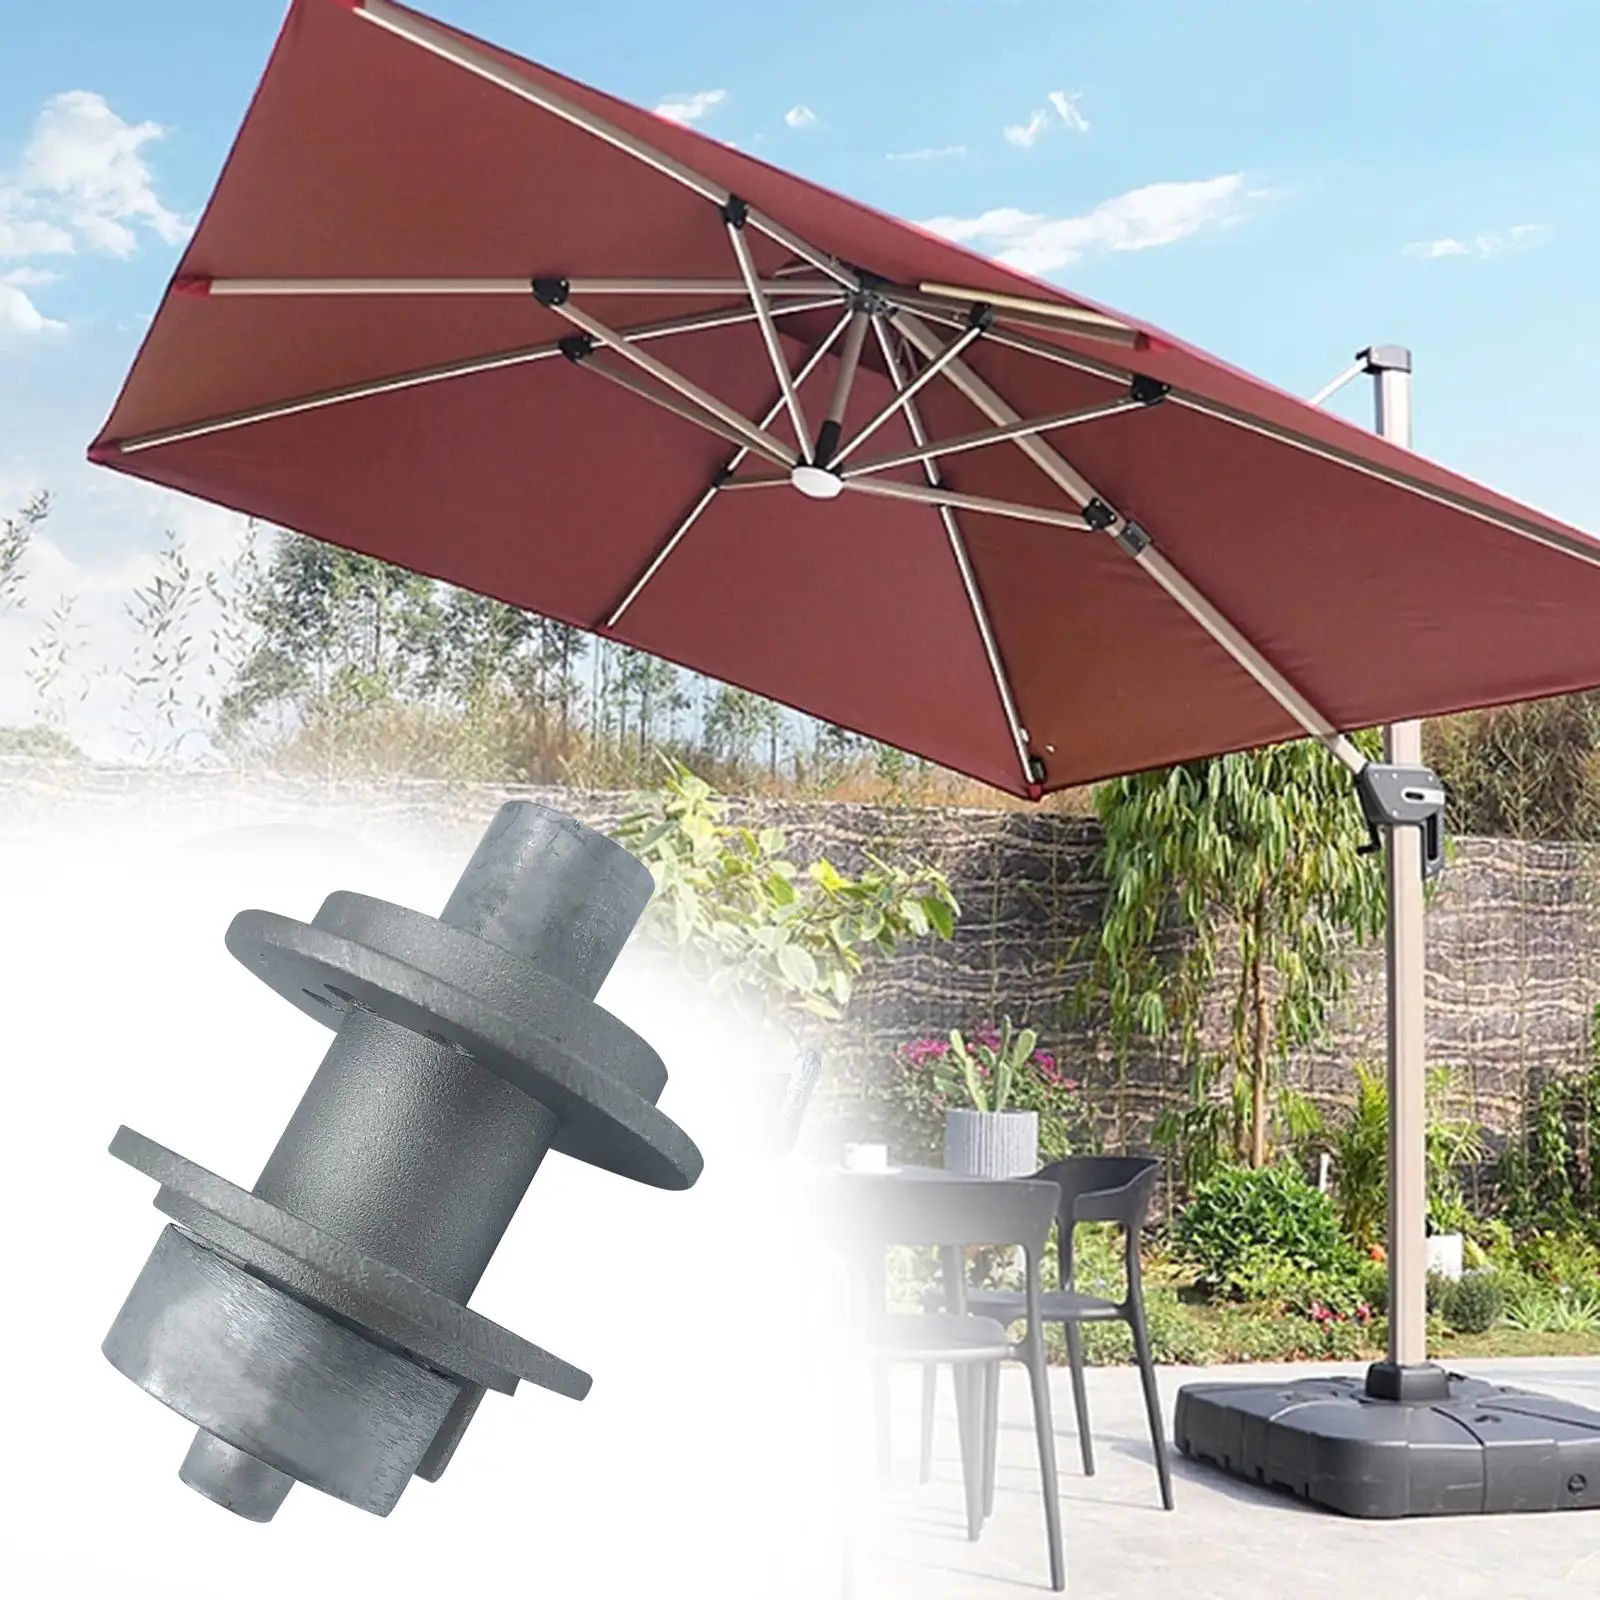 Patio Umbrella Accessories Adjustable Stainless Heavy Duty Outdoor Umbrella Clamp Mount for Balcony Courtyard Outdoor Patio Gray